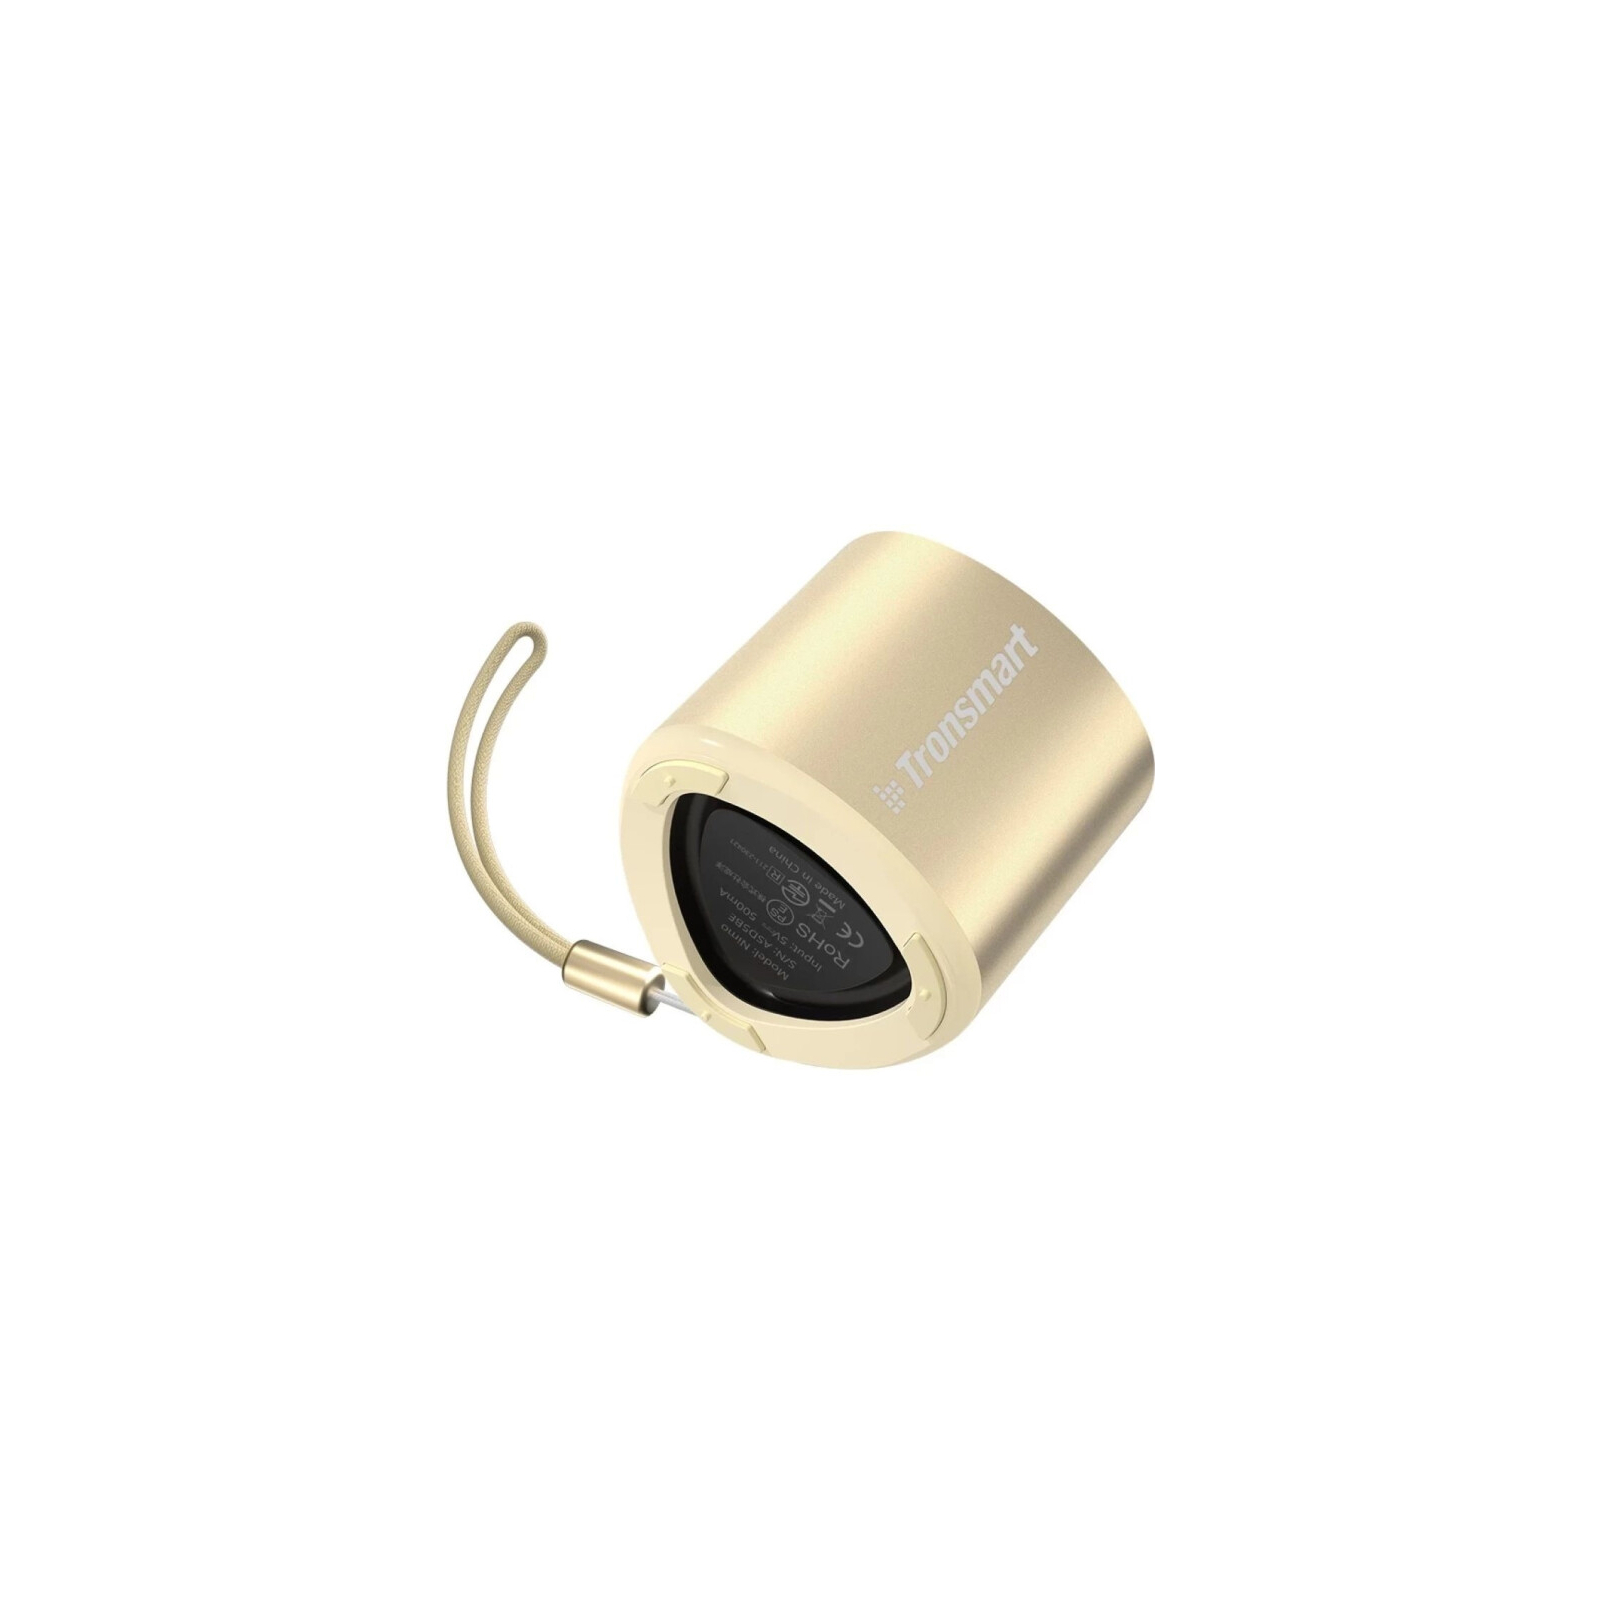 Акустична система Tronsmart Nimo Mini Speaker Black (963869) зображення 3